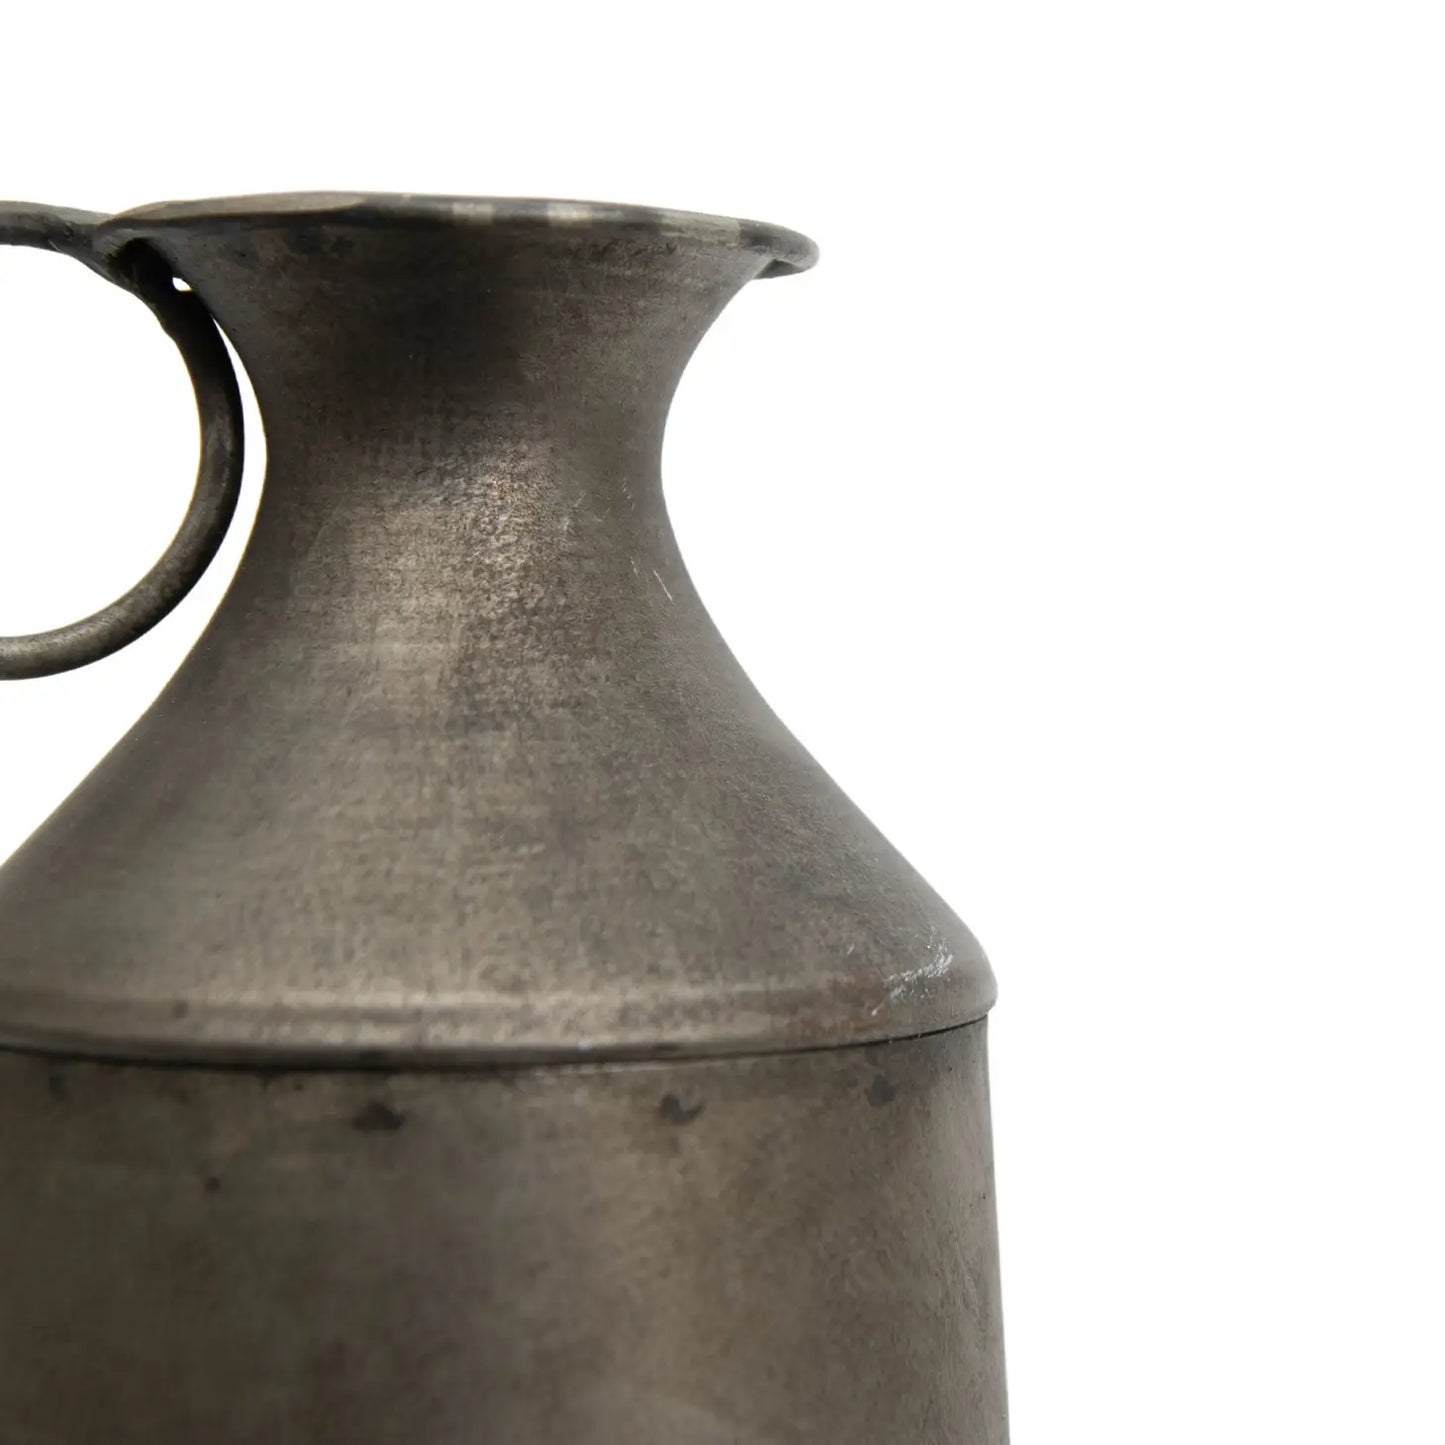 Galvanized vase pitcher